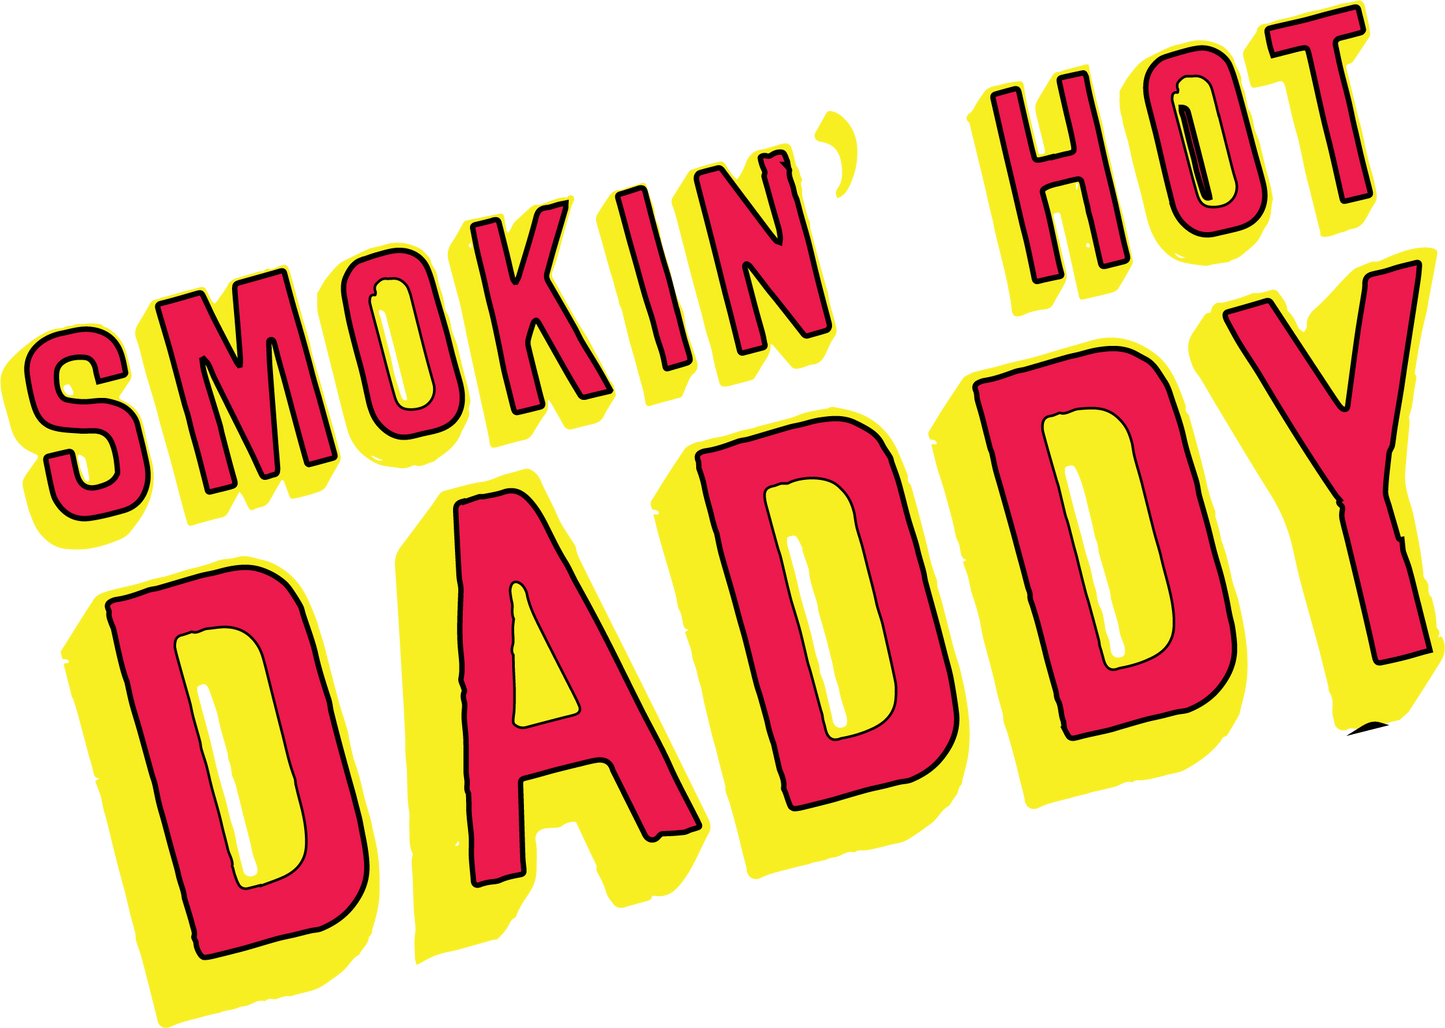 Smokin' Hot Daddy Funny Tee